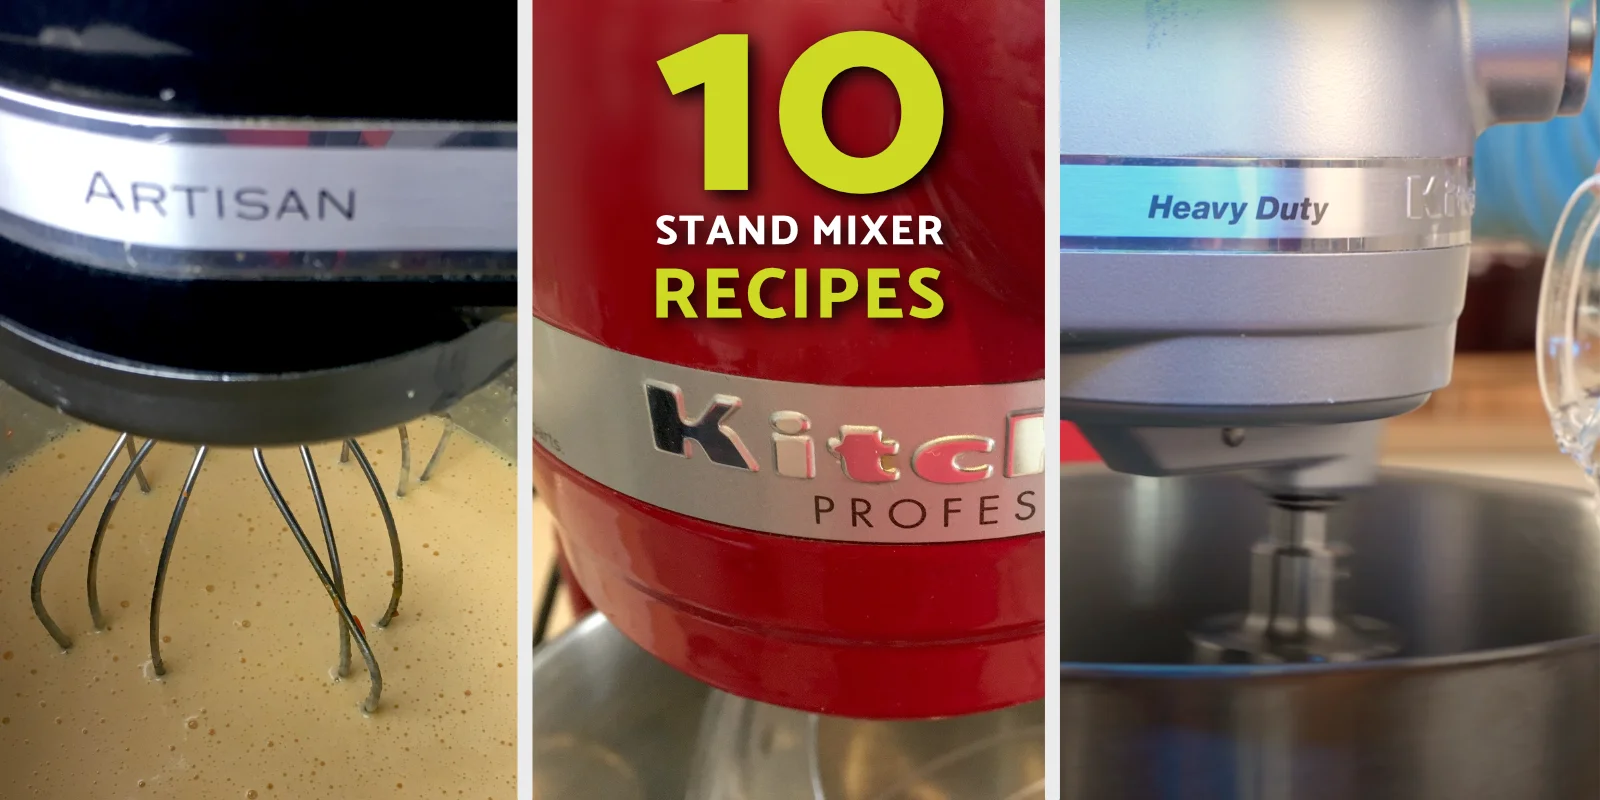 KitchenAid®Stand Mixer Clear Glass Bowl Attachment, 5-Qt.  Kitchen aid  mixer, Kitchen aid recipes, Kitchen aid mixer recipes